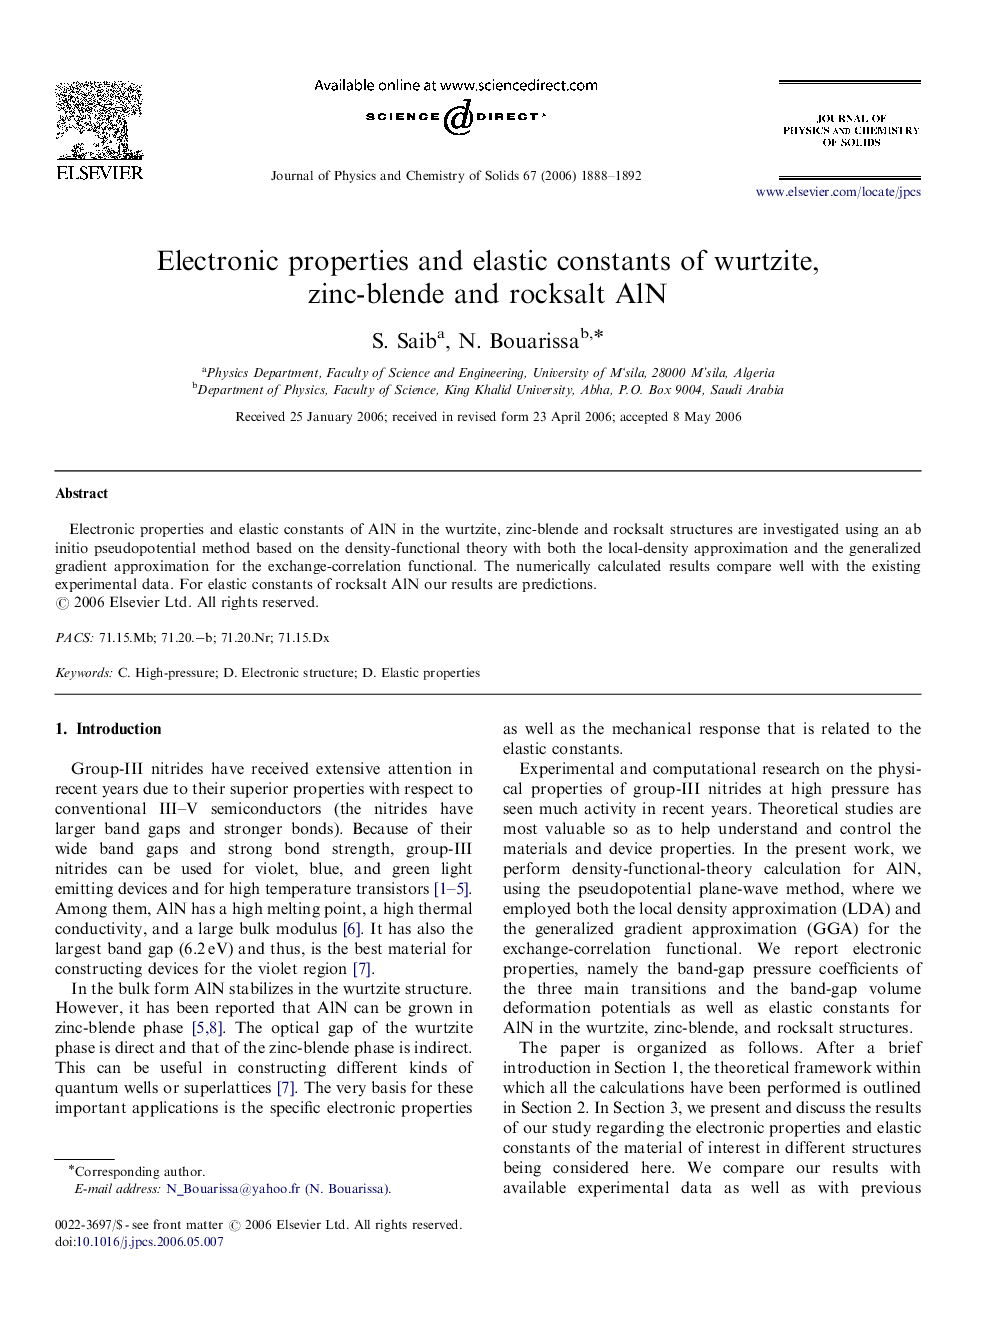 Electronic properties and elastic constants of wurtzite, zinc-blende and rocksalt AlN